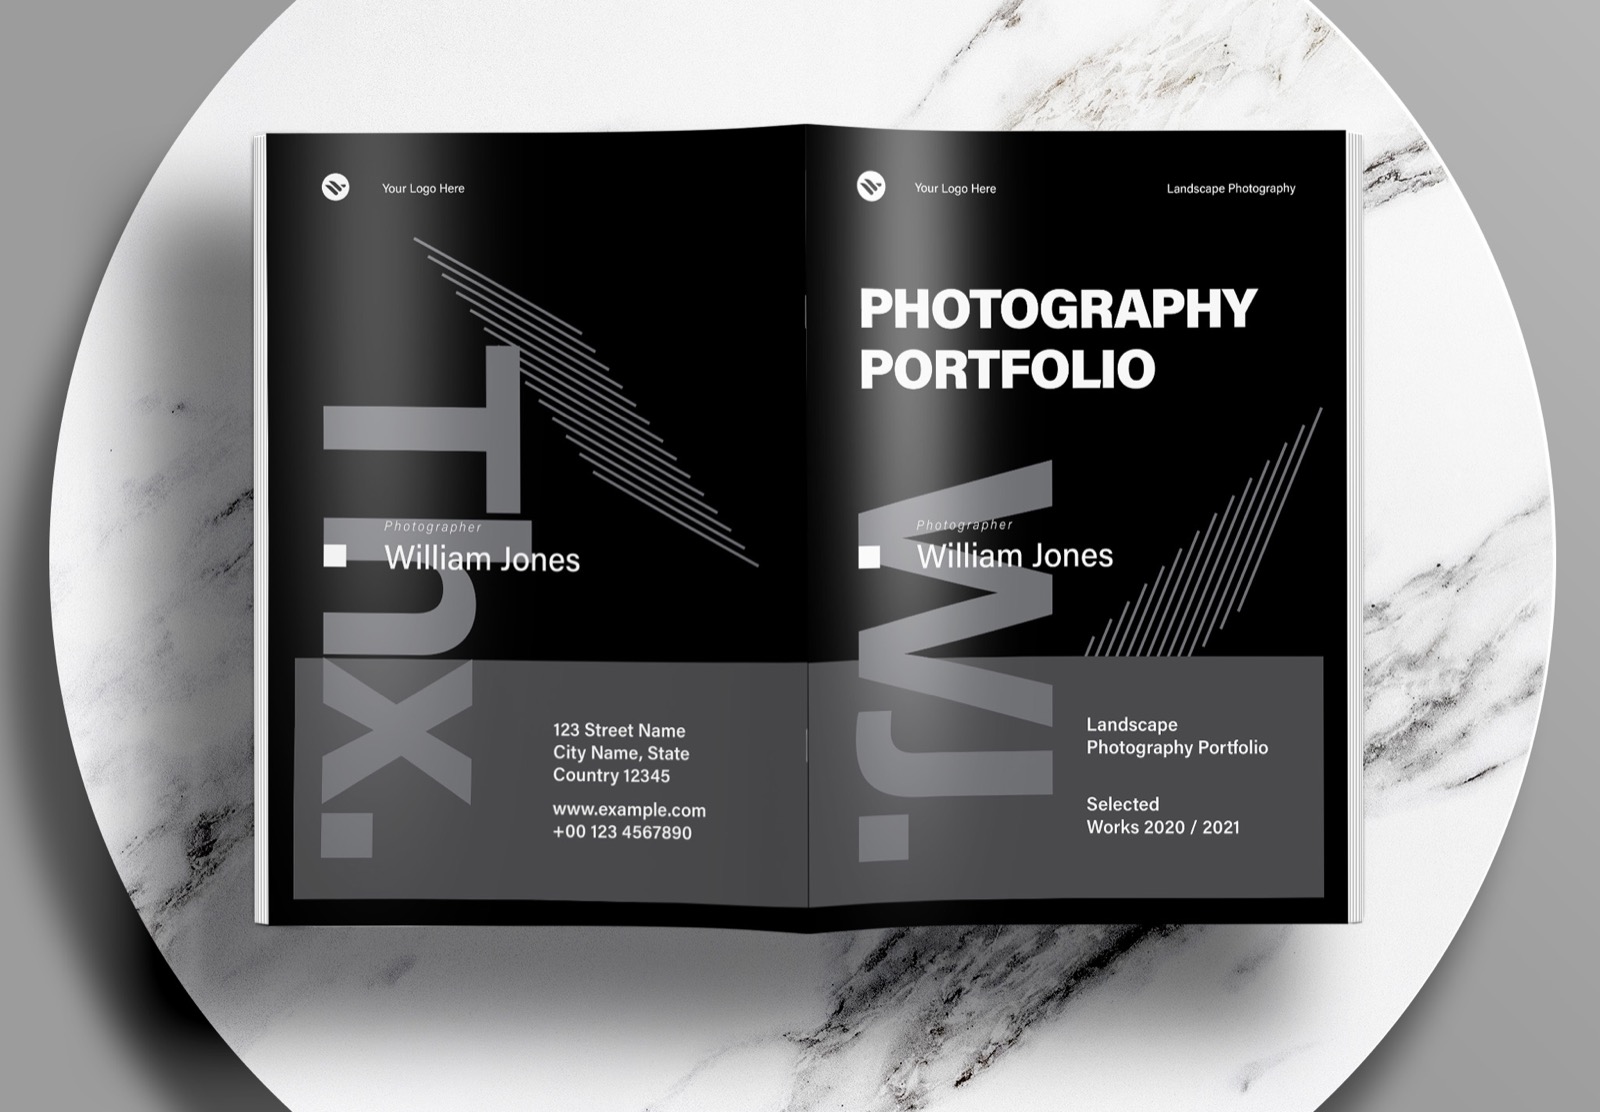 Free-InDesign-Black-Photography-Portfolio-Layout-Templates